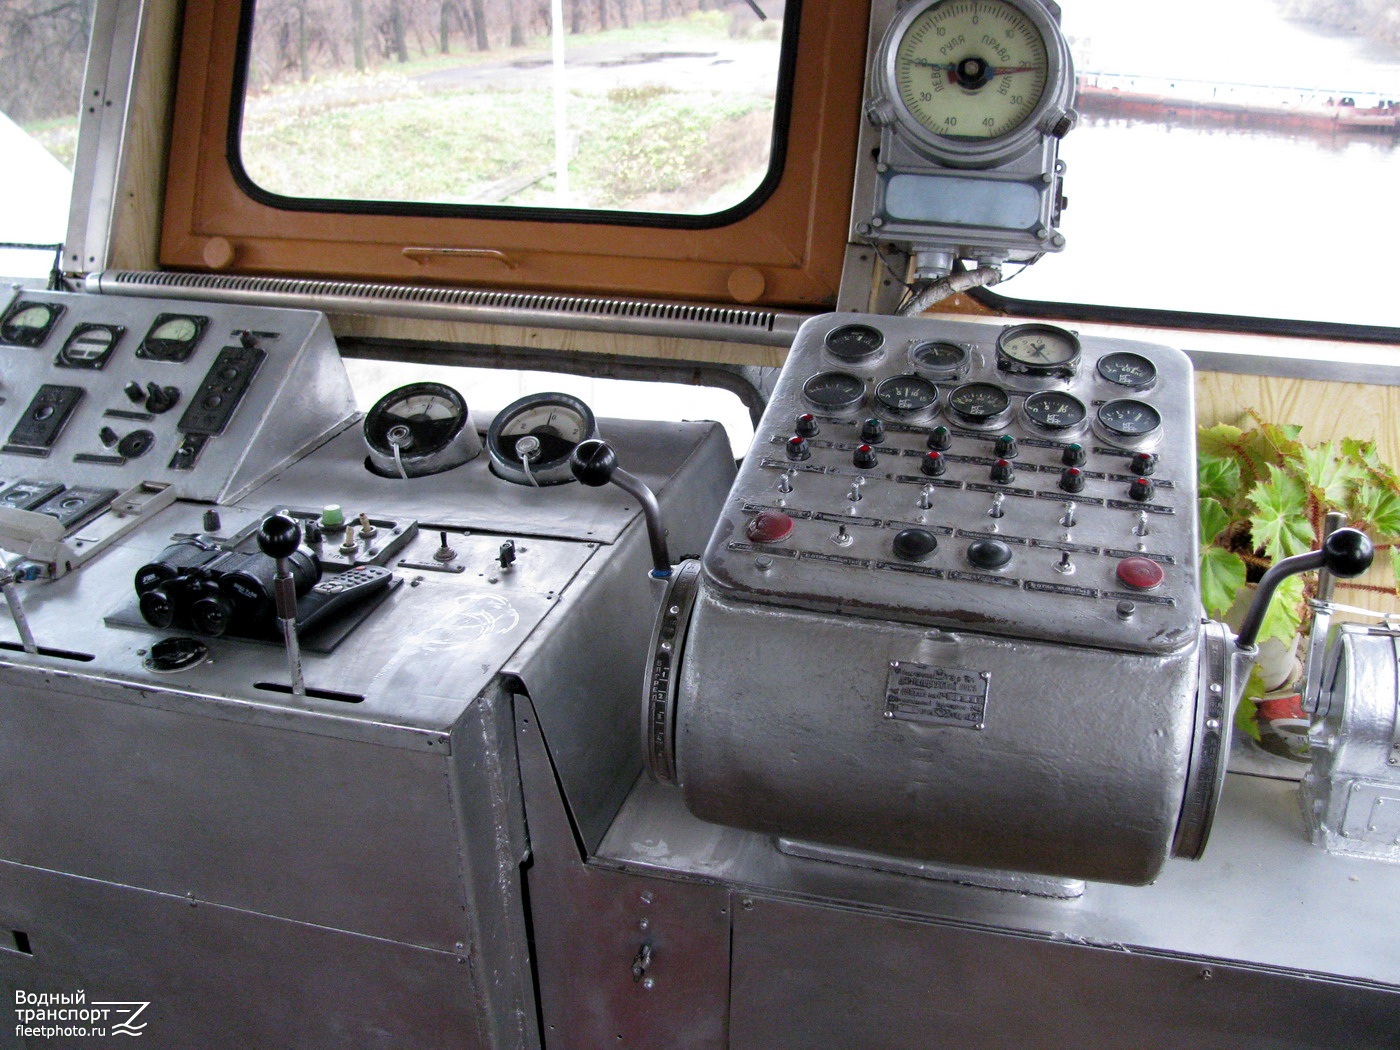 Речной-59. Wheelhouses, Control panels